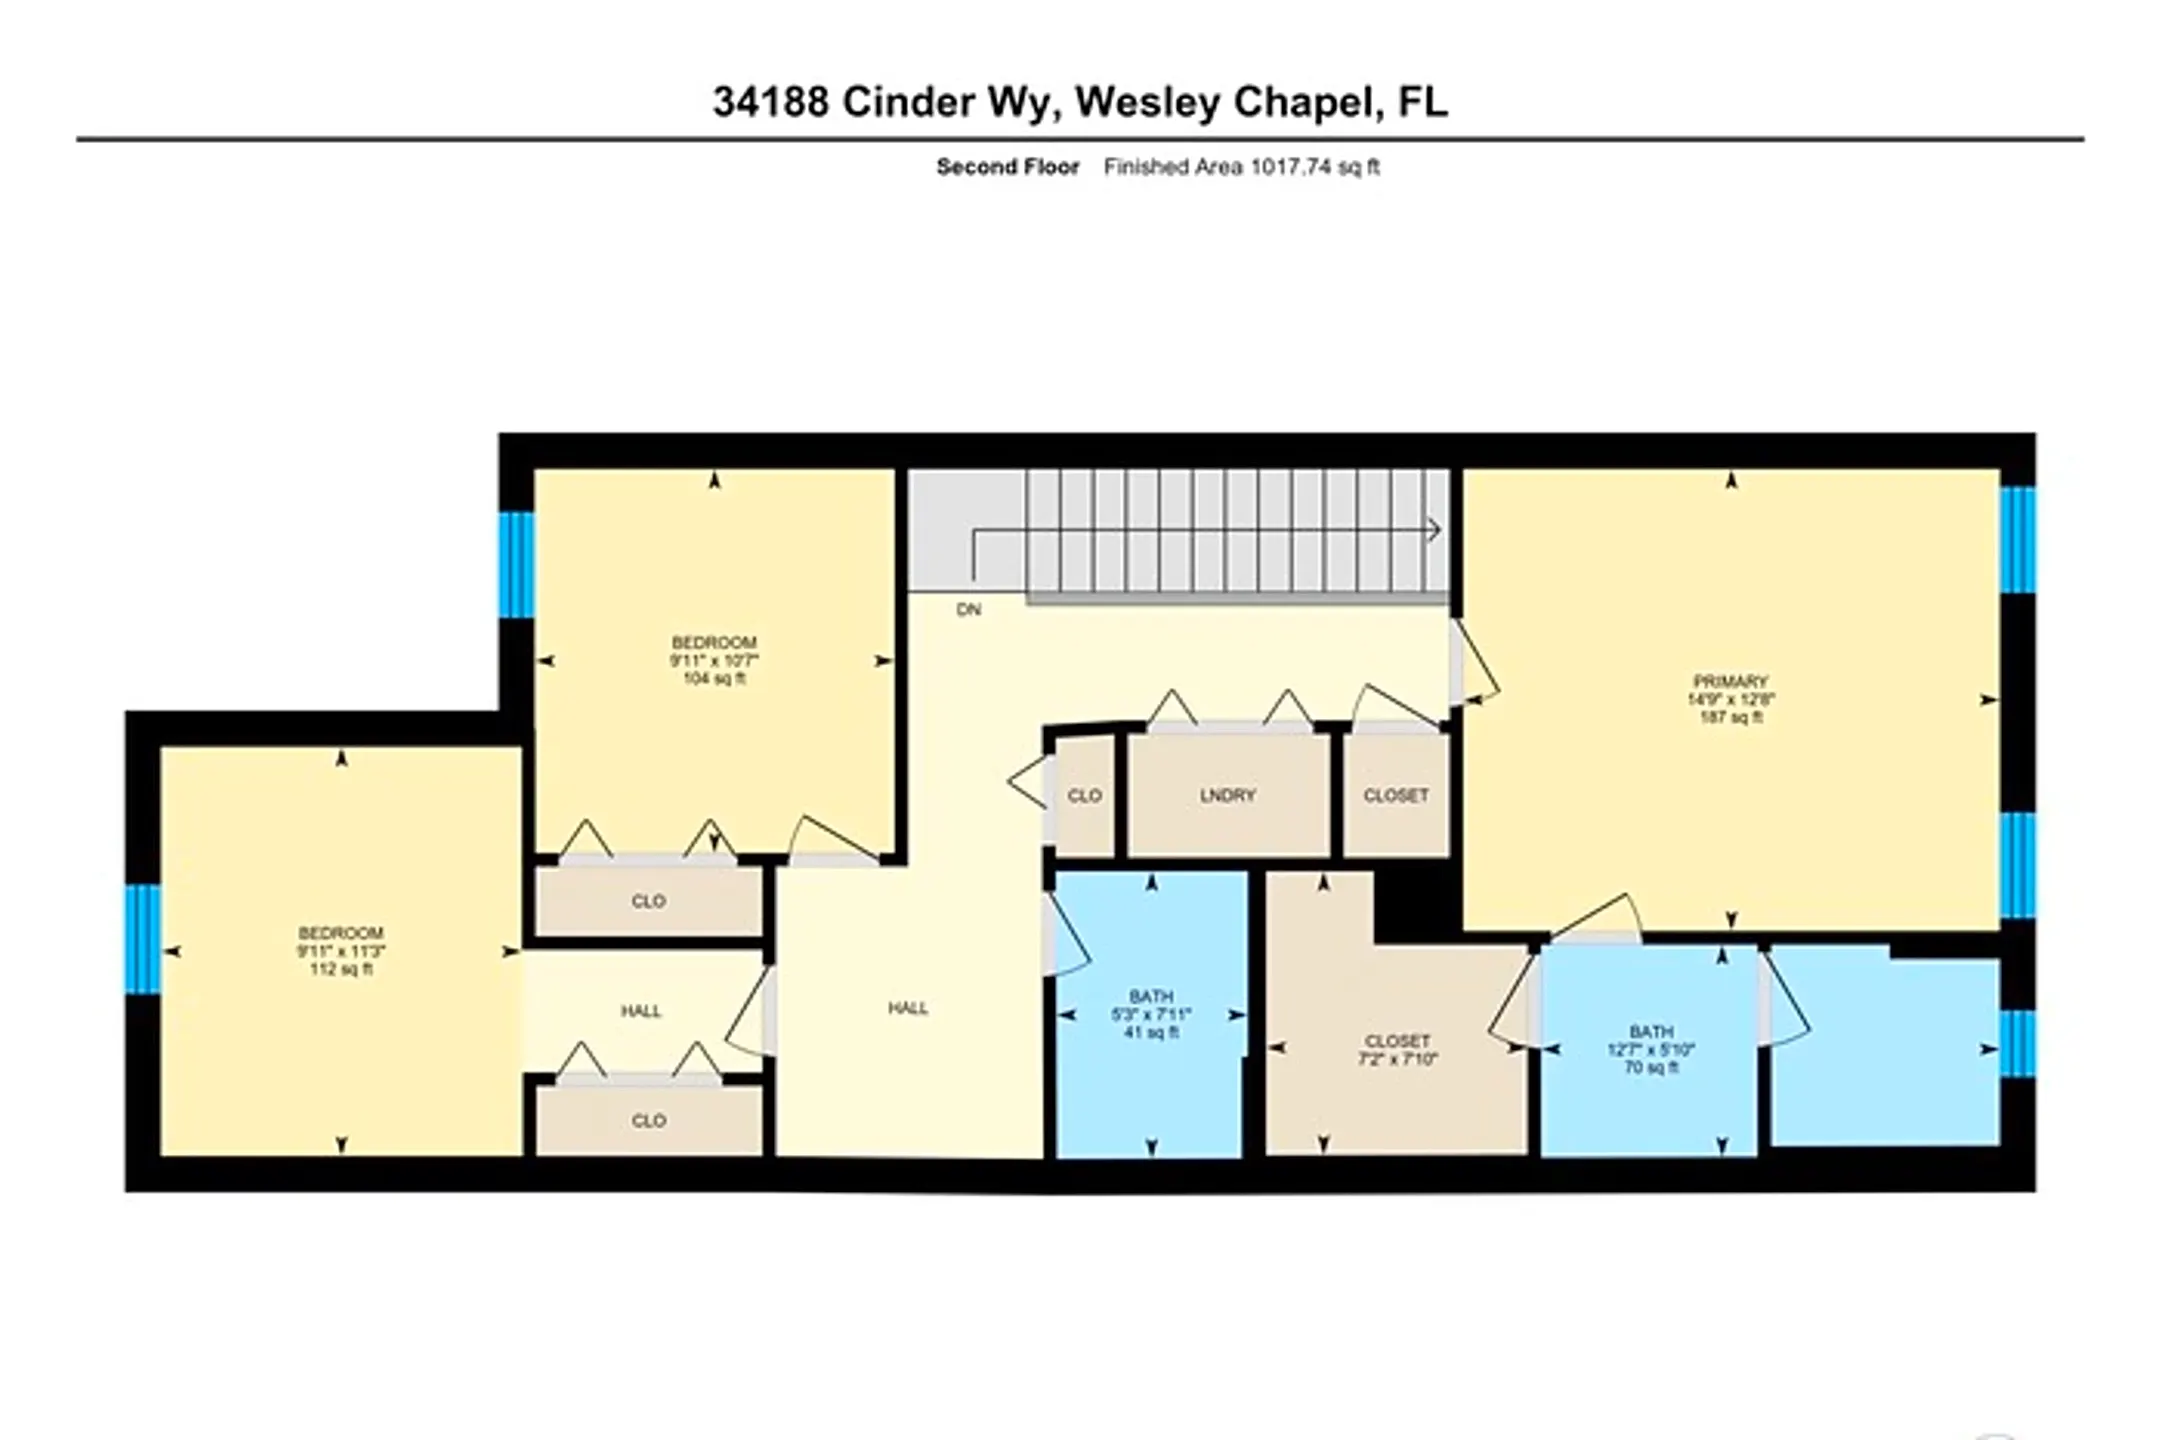 Pool - 34188 Cinder Wy - Wesley Chapel, FL